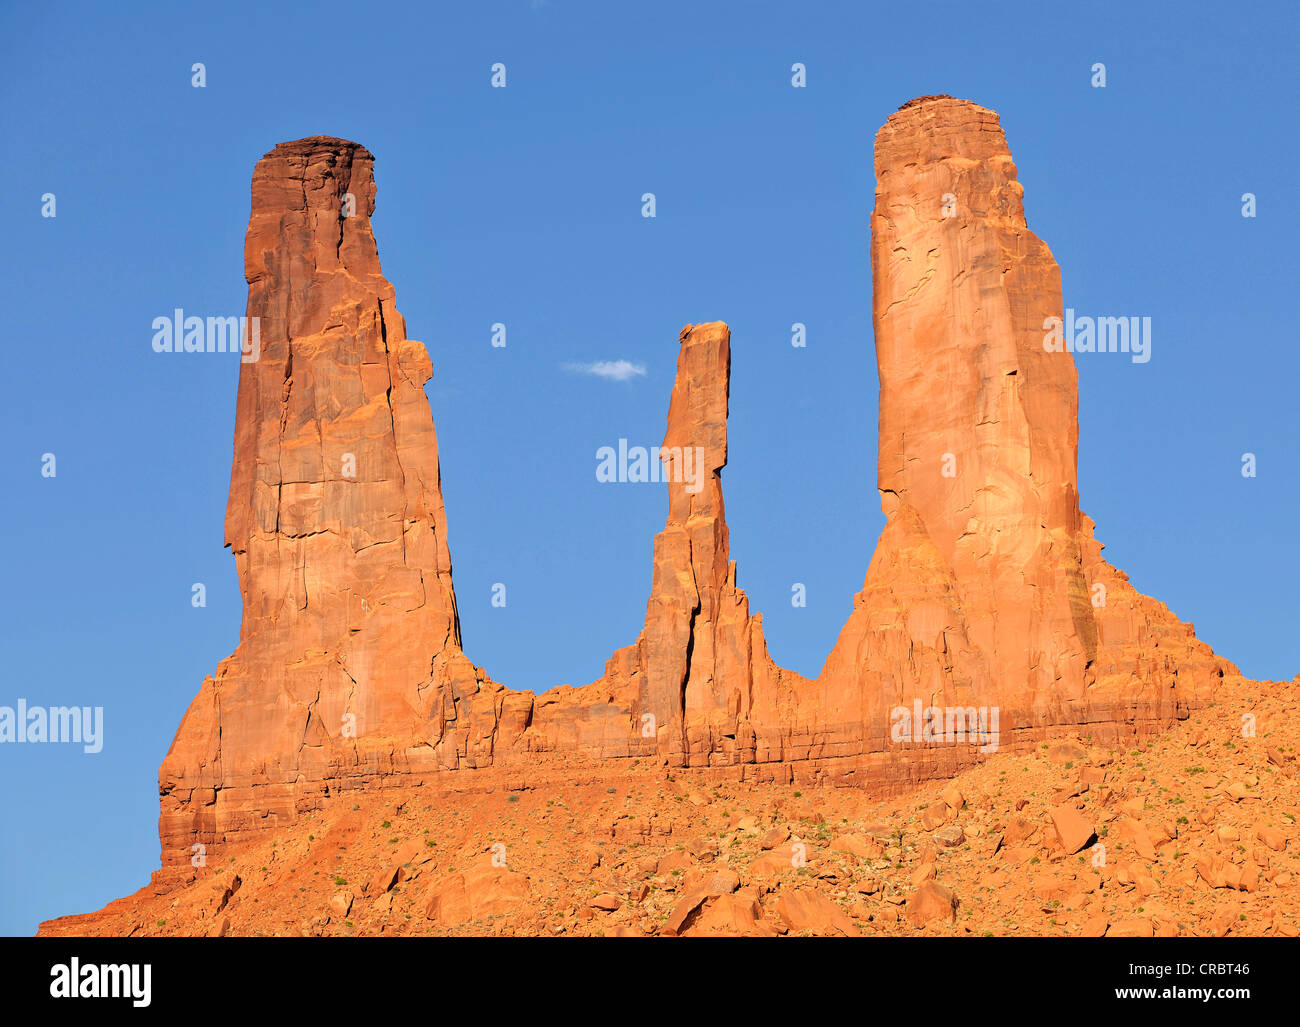 Drei Schwestern Pinnacles, Felsformation im Monument Valley Navajo Tribal Park, Navajo Nation Reservation, Arizona, Utah Stockfoto